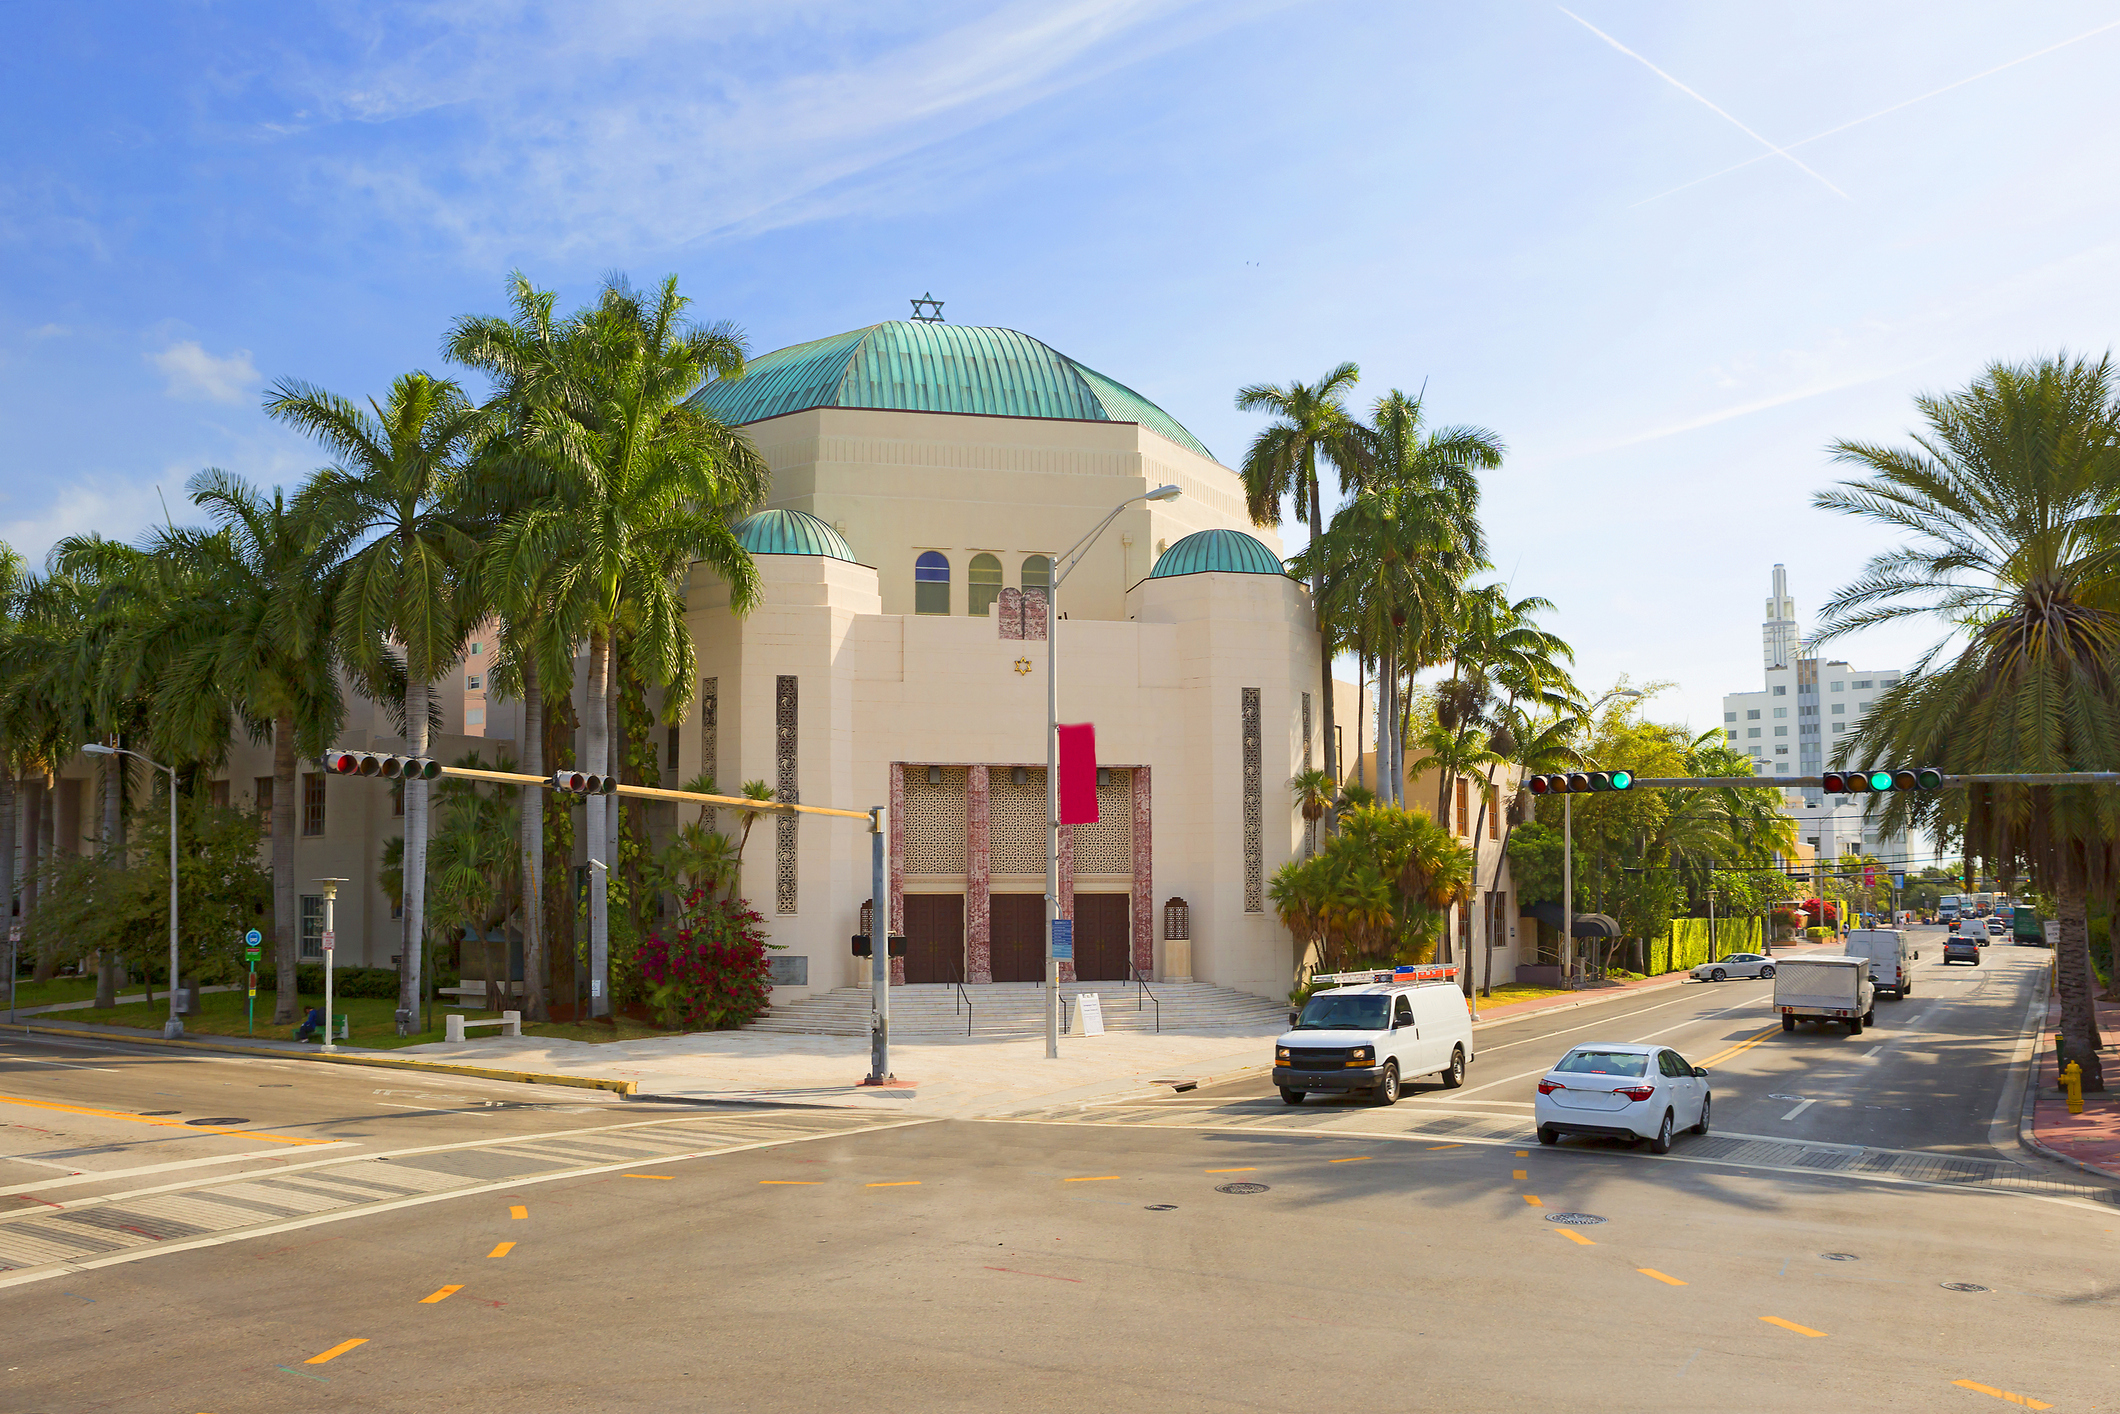 A Jewish Synagogue in Miami